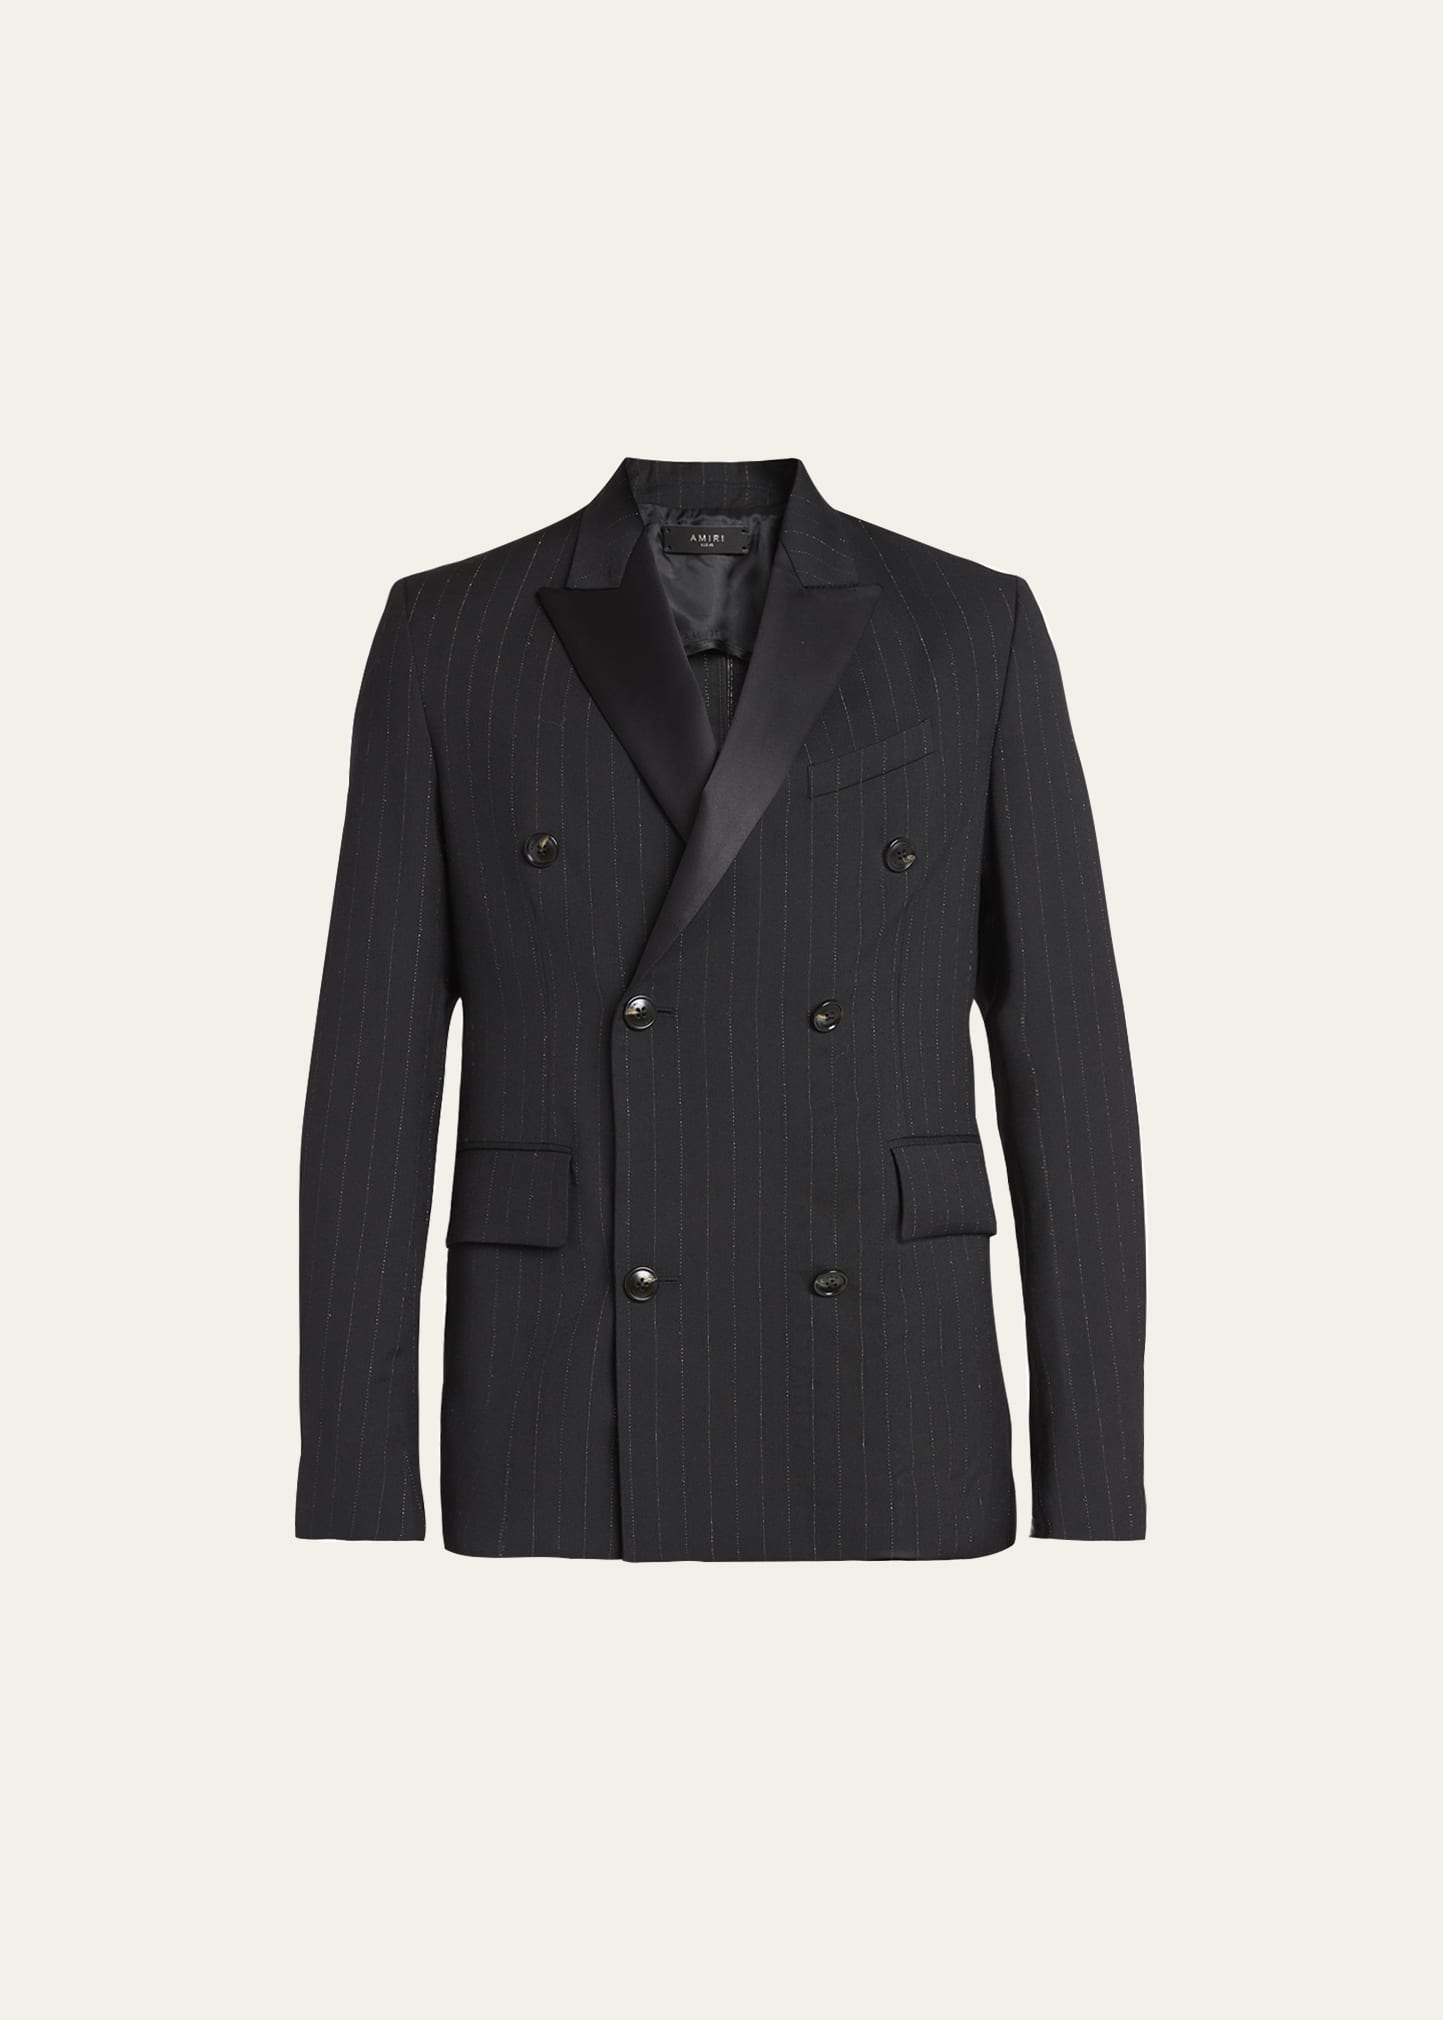 Amiri Men's Double-Breasted Metallic Pinstripe Tuxedo Jacket